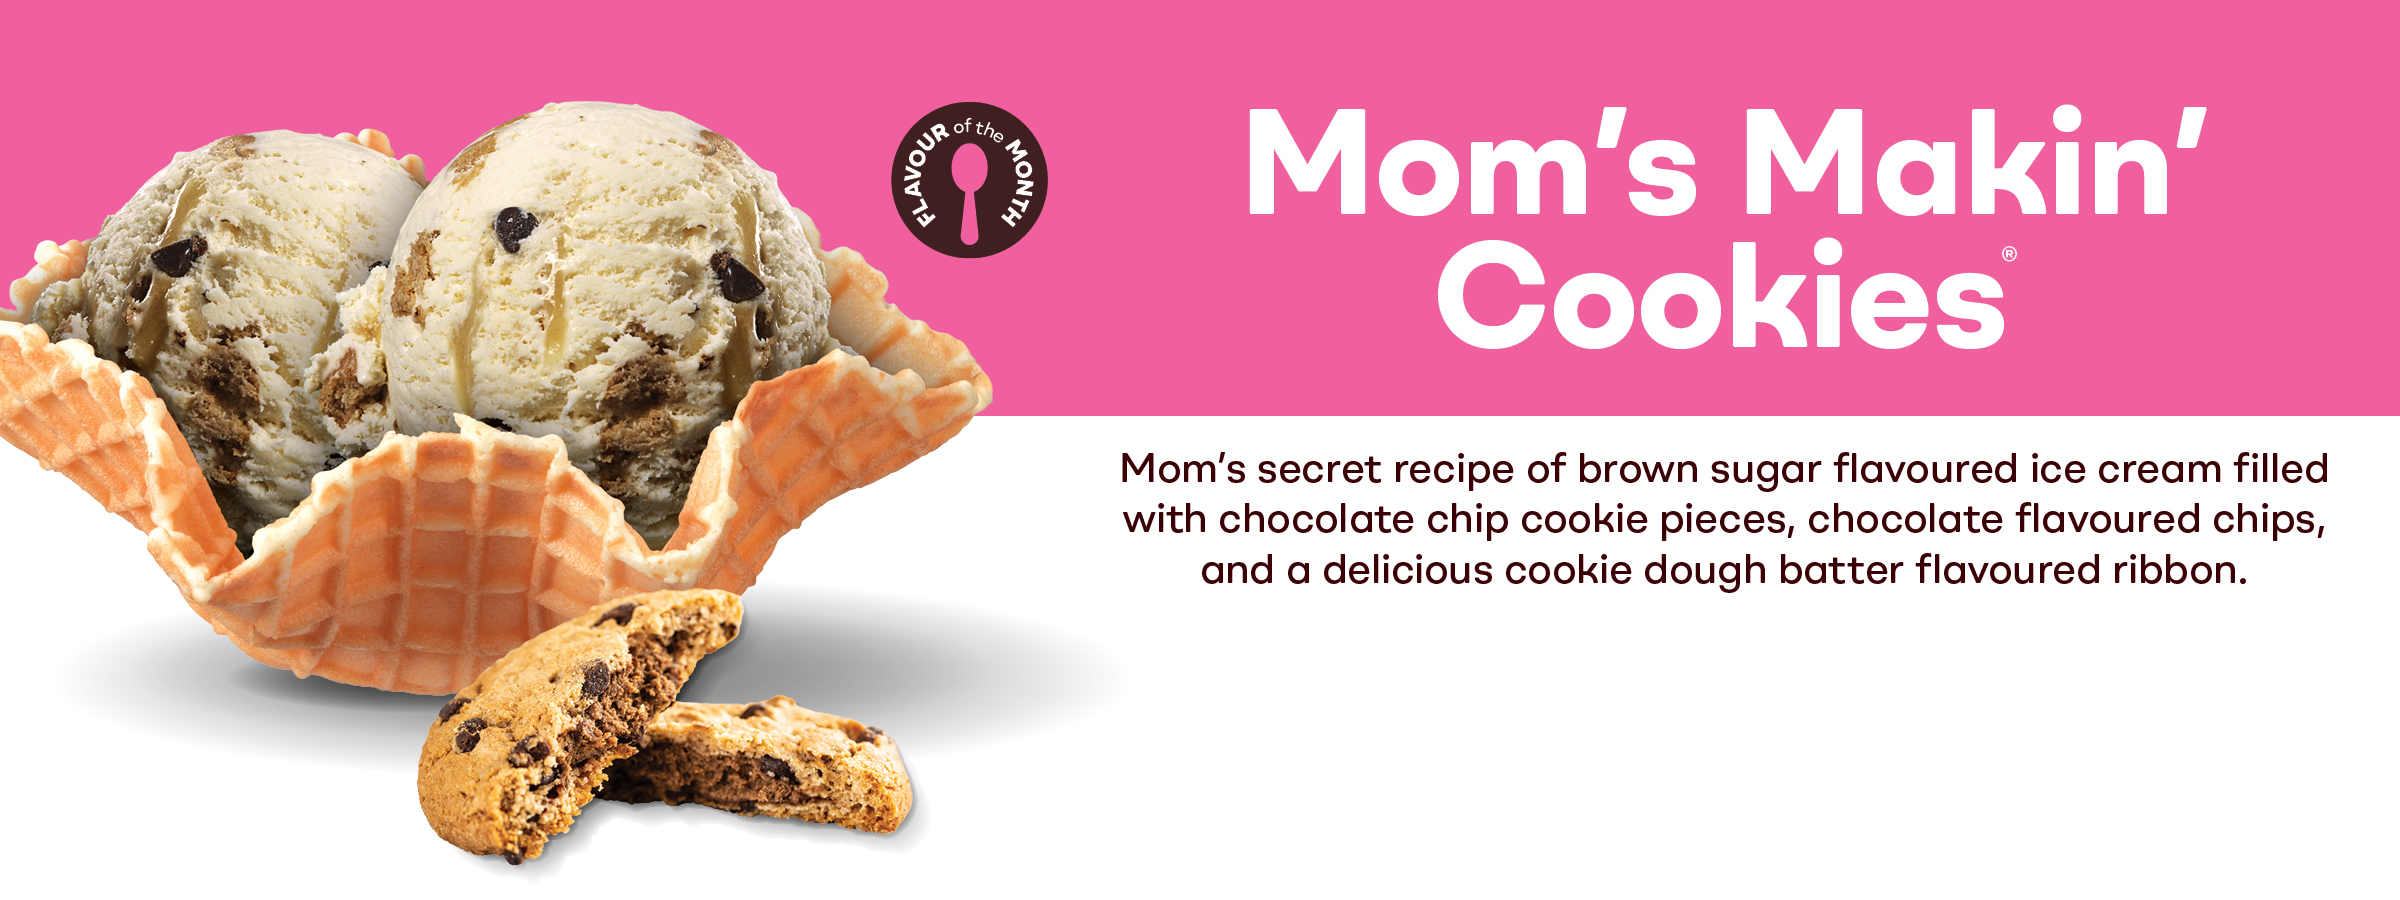 Mom’s Makin’ Cookies